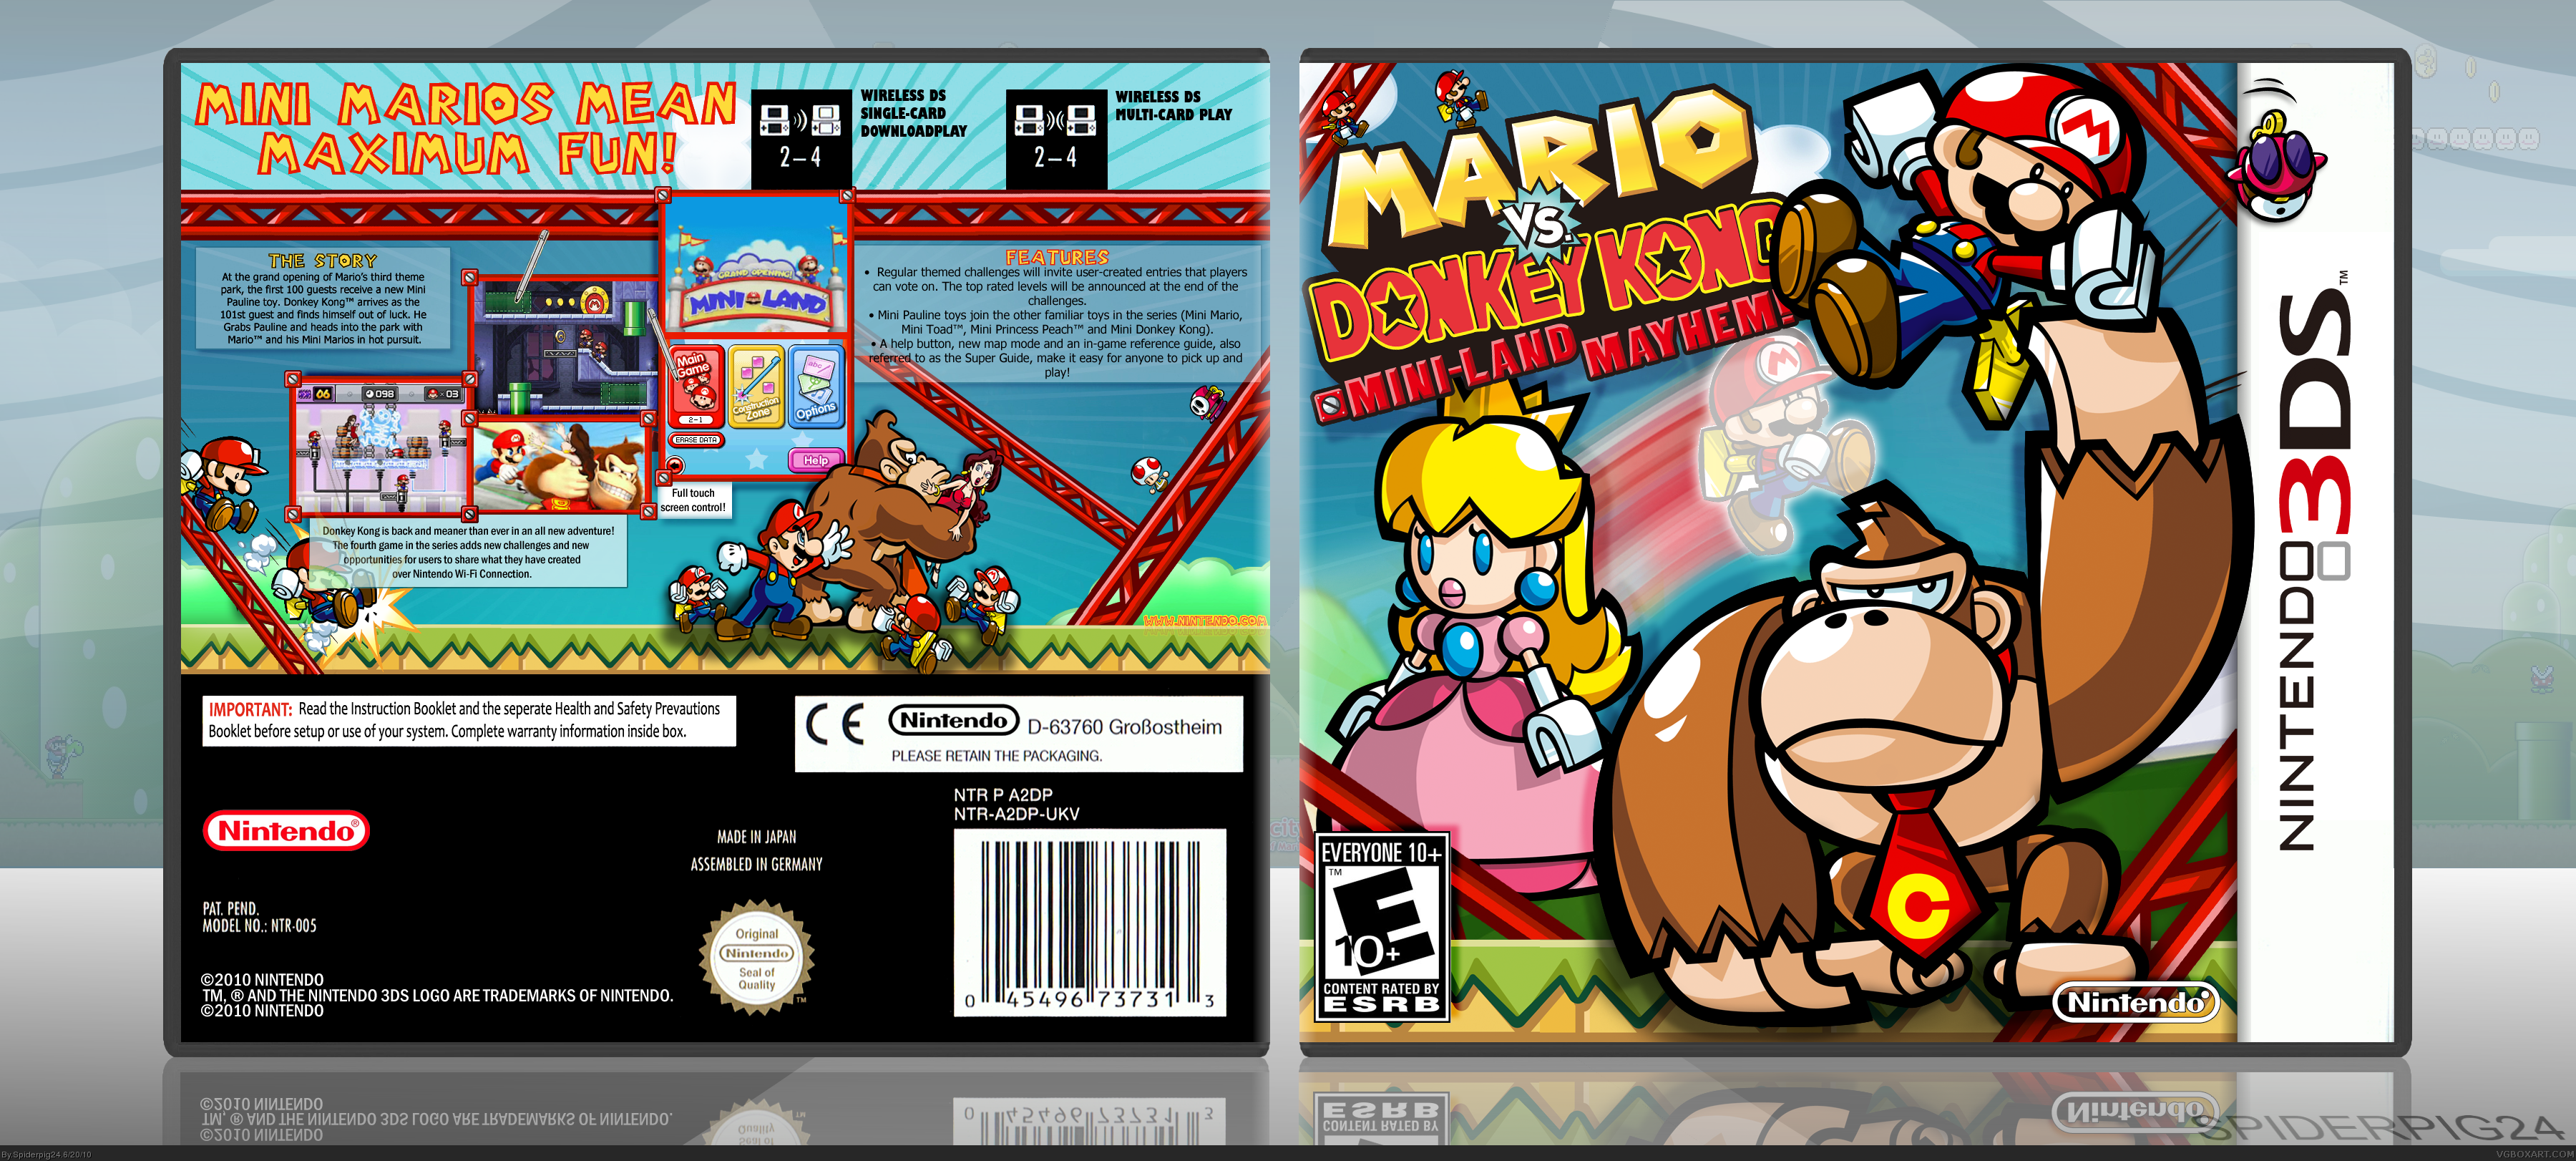 Mario vs donkey kong nintendo switch. Марио Конг Нинтендо. New Nintendo 3ds корпус Donkey Kong. Mario vs Donkey Kong 3ds. Mario vs. Donkey Kong game boy.